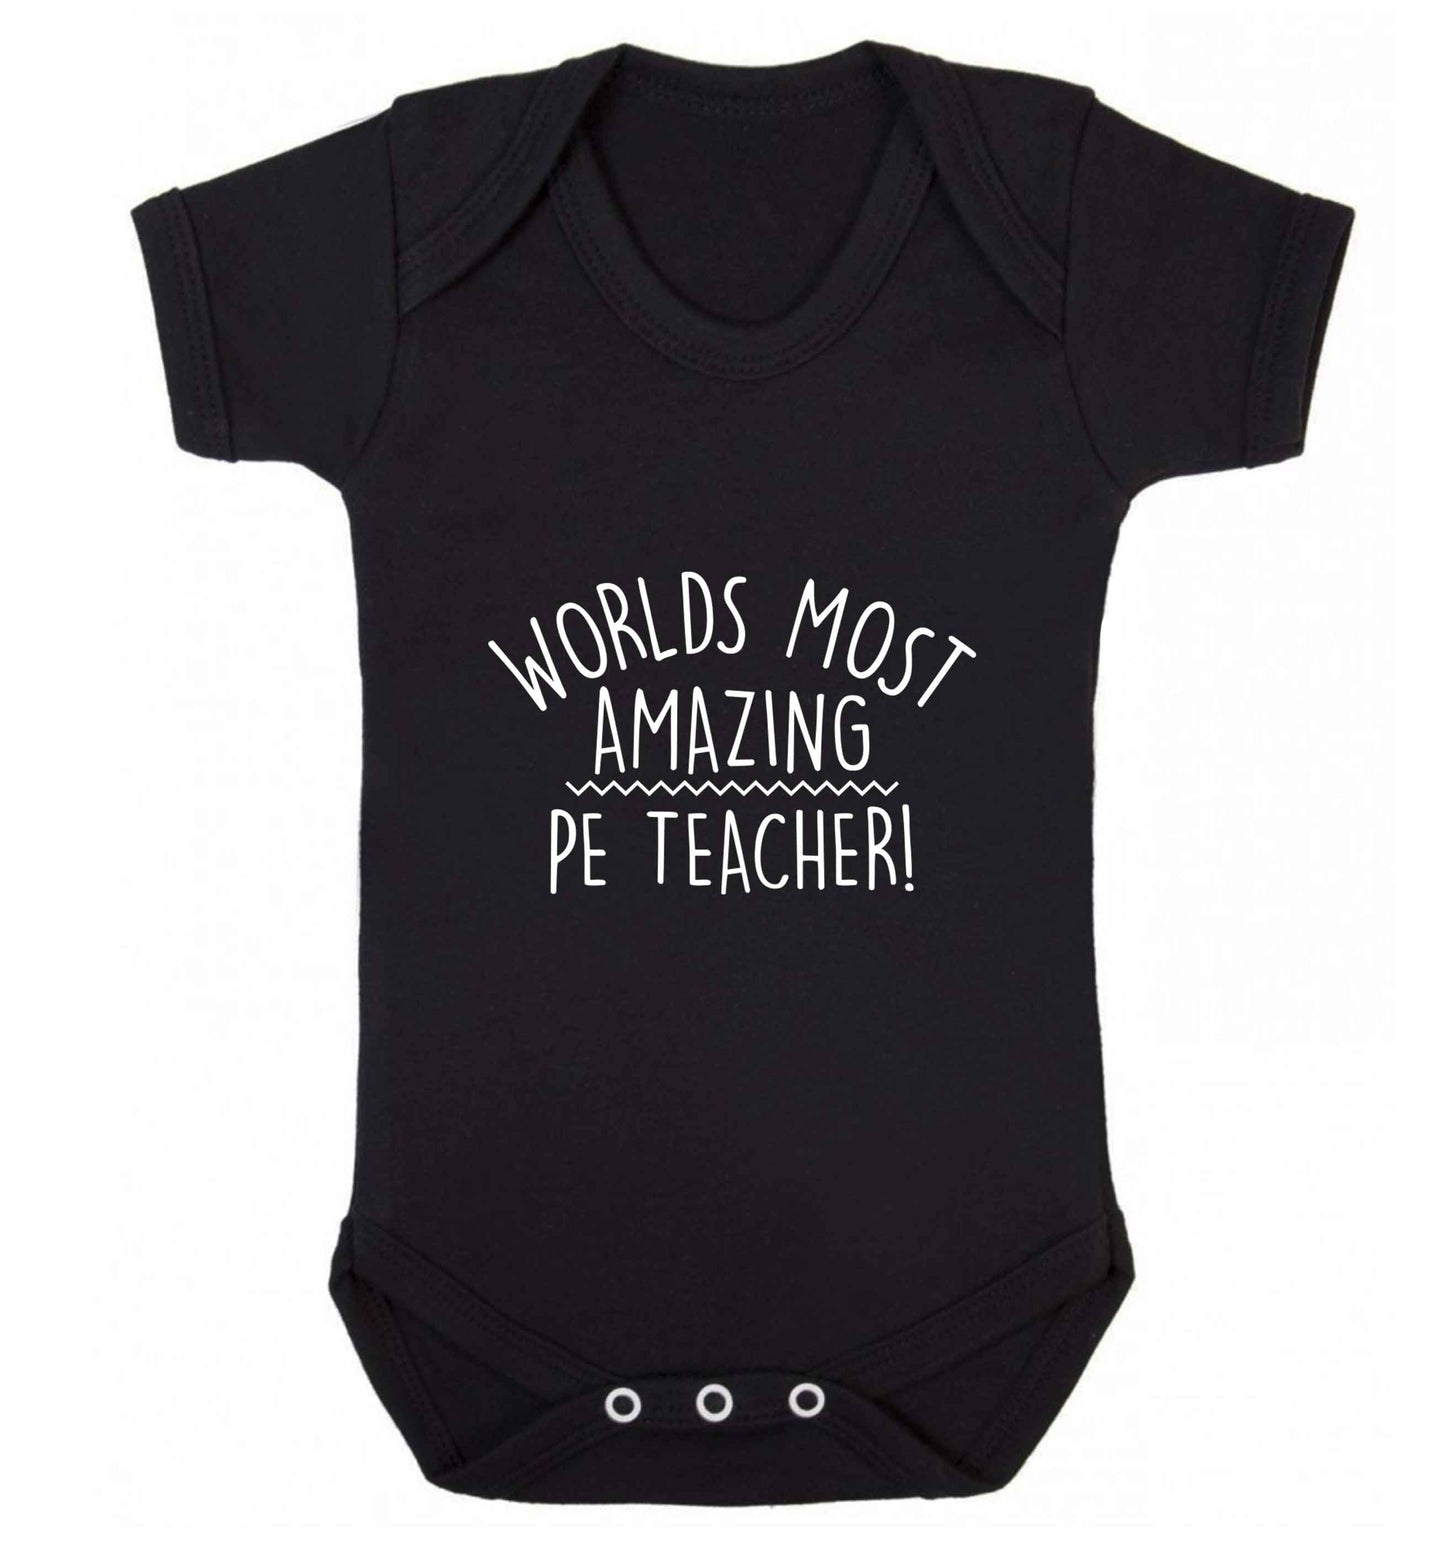 Worlds most amazing PE teacher baby vest black 18-24 months